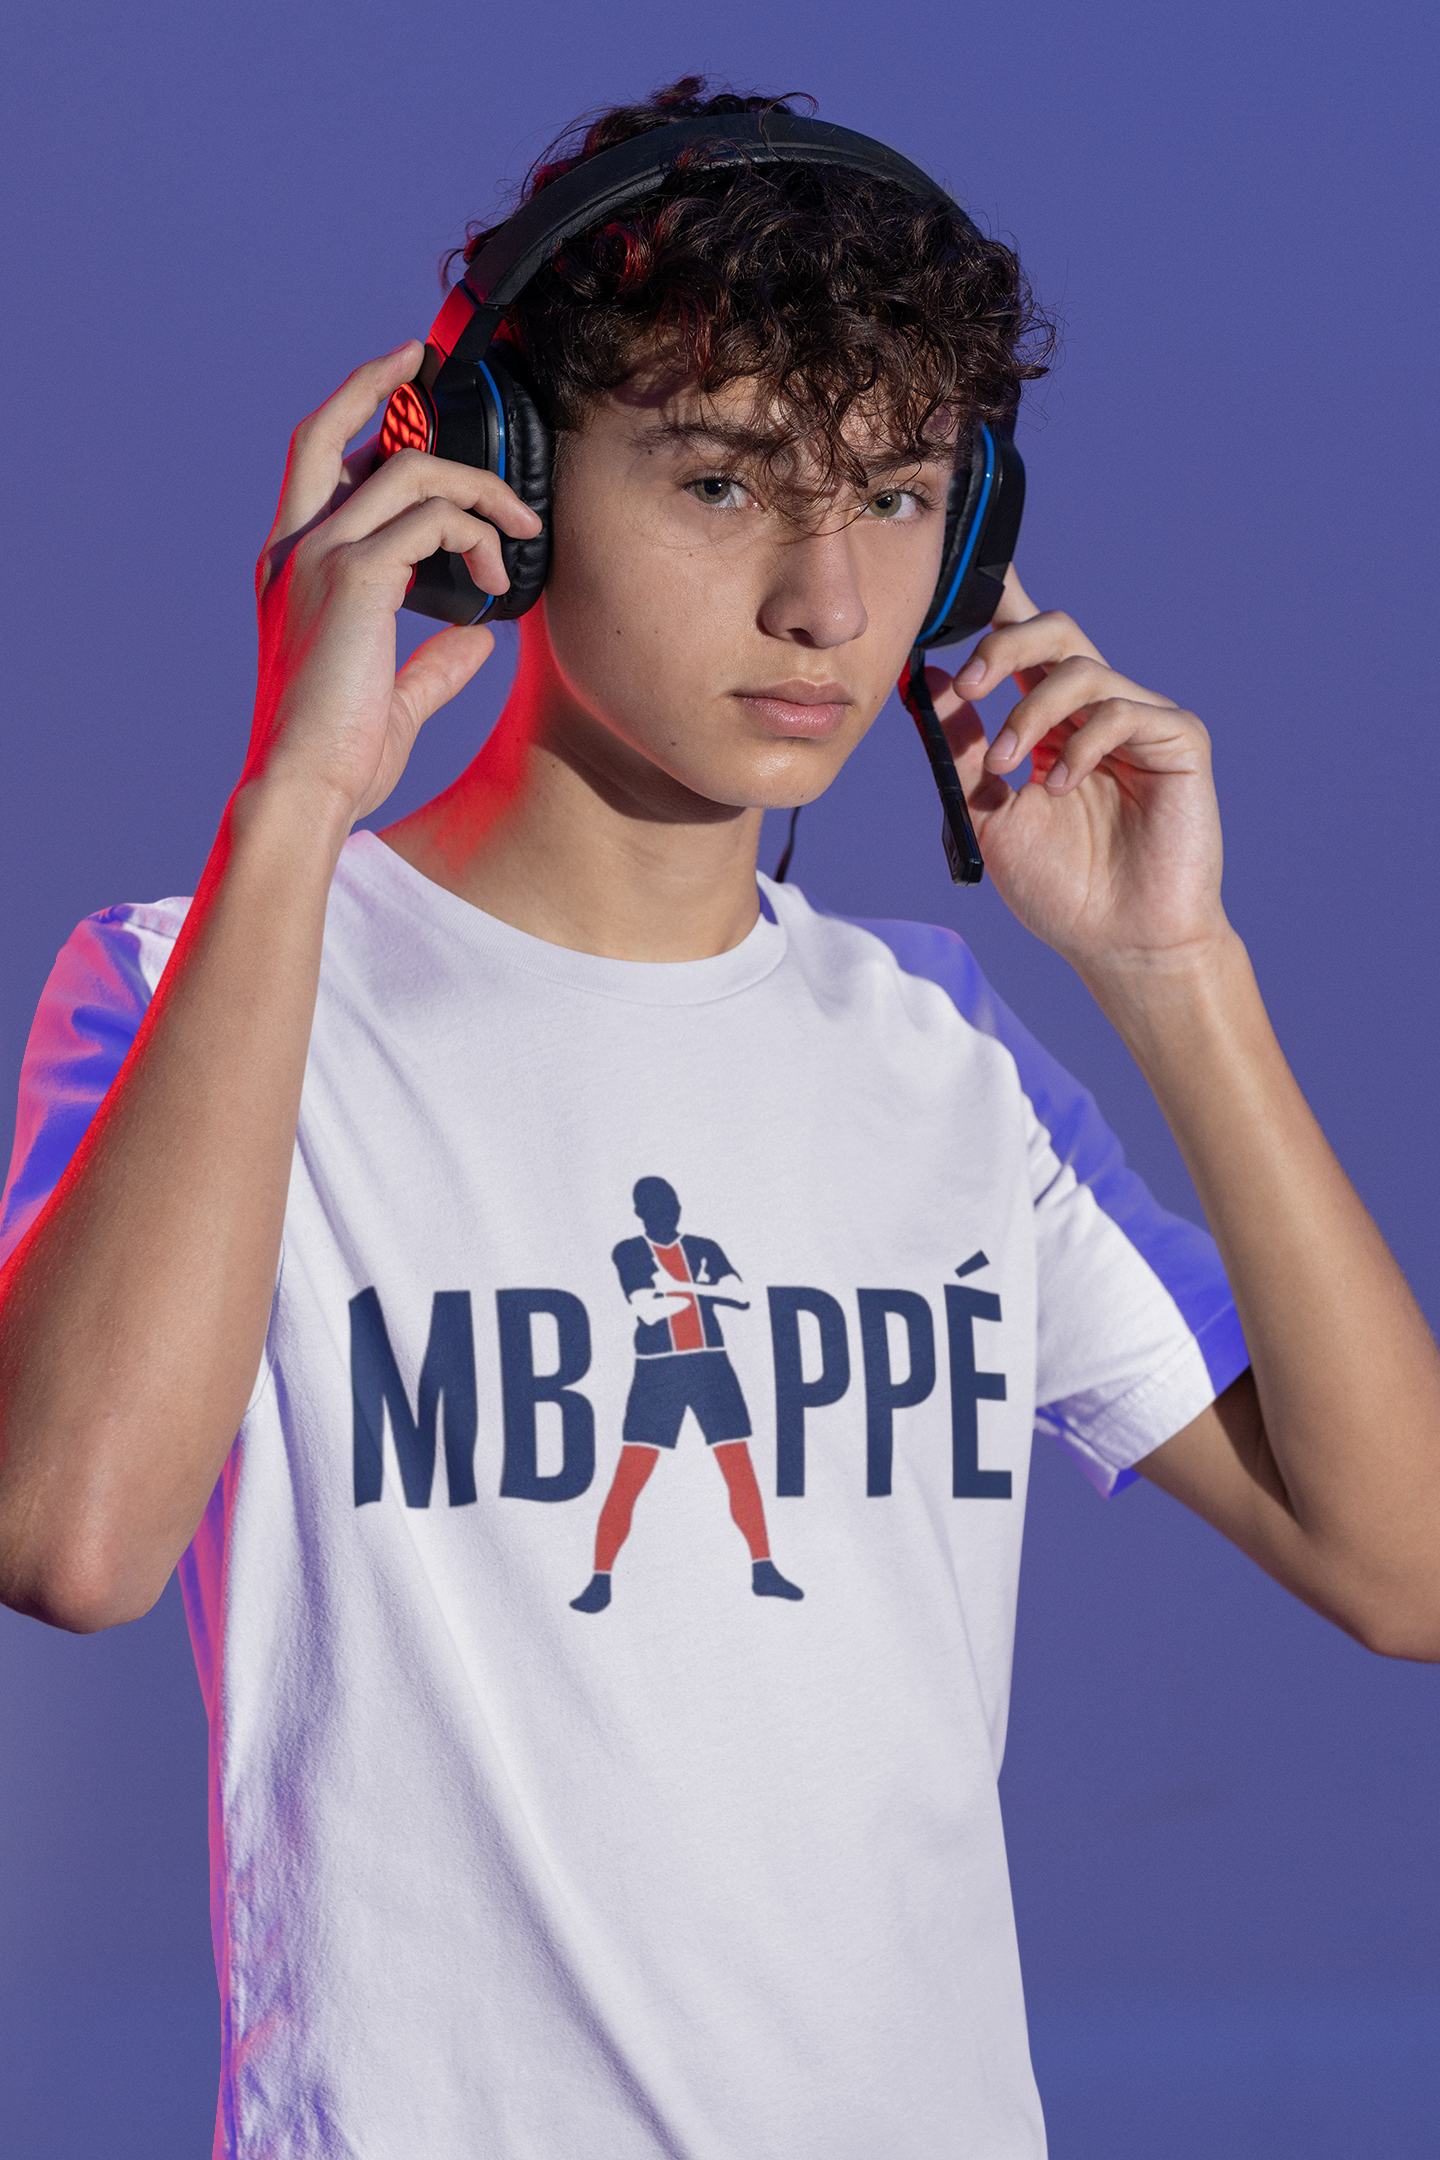 M.bappee (white)T-shirt